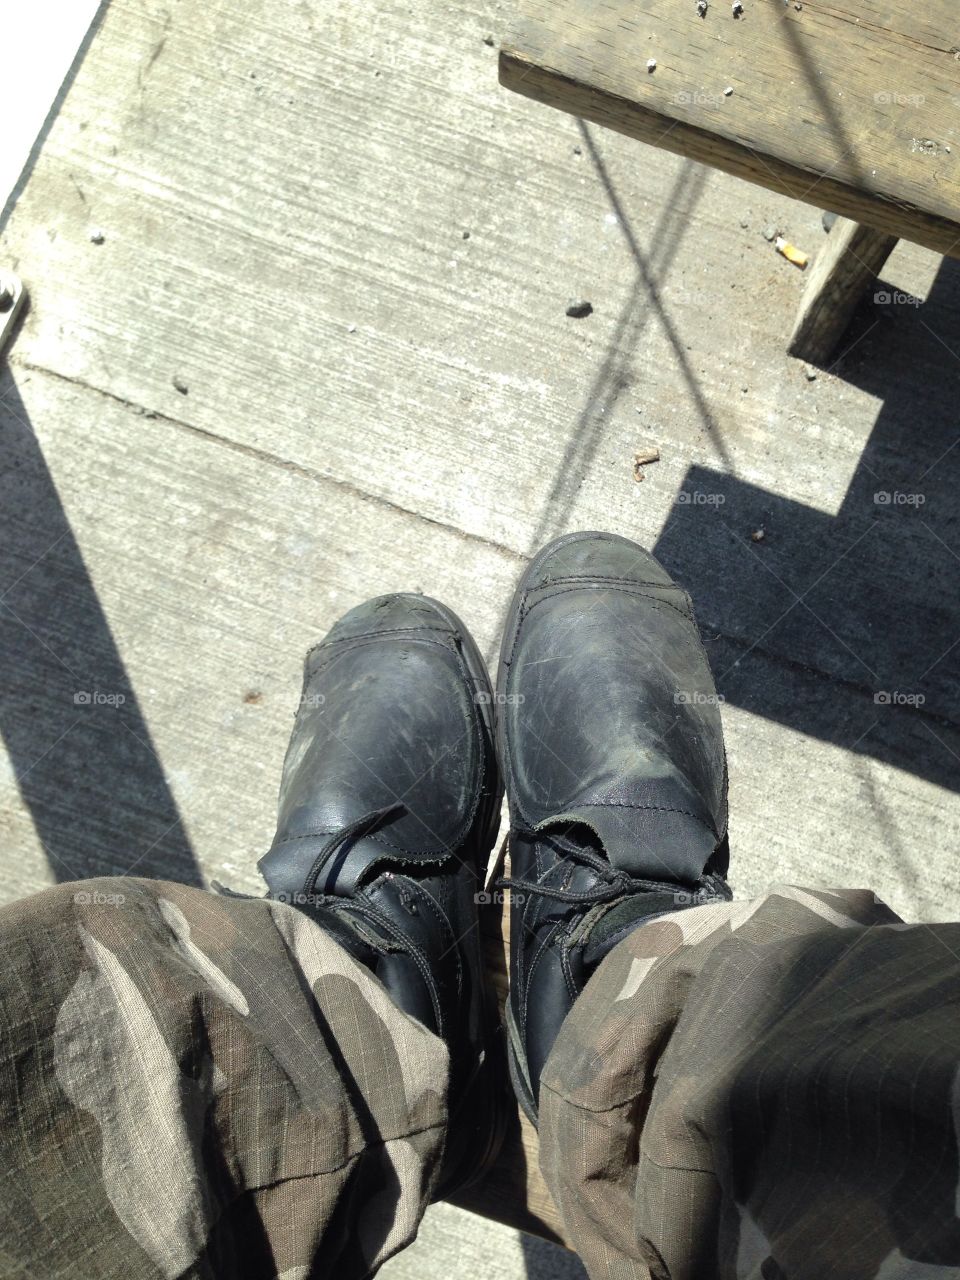 Boots on ma feet
